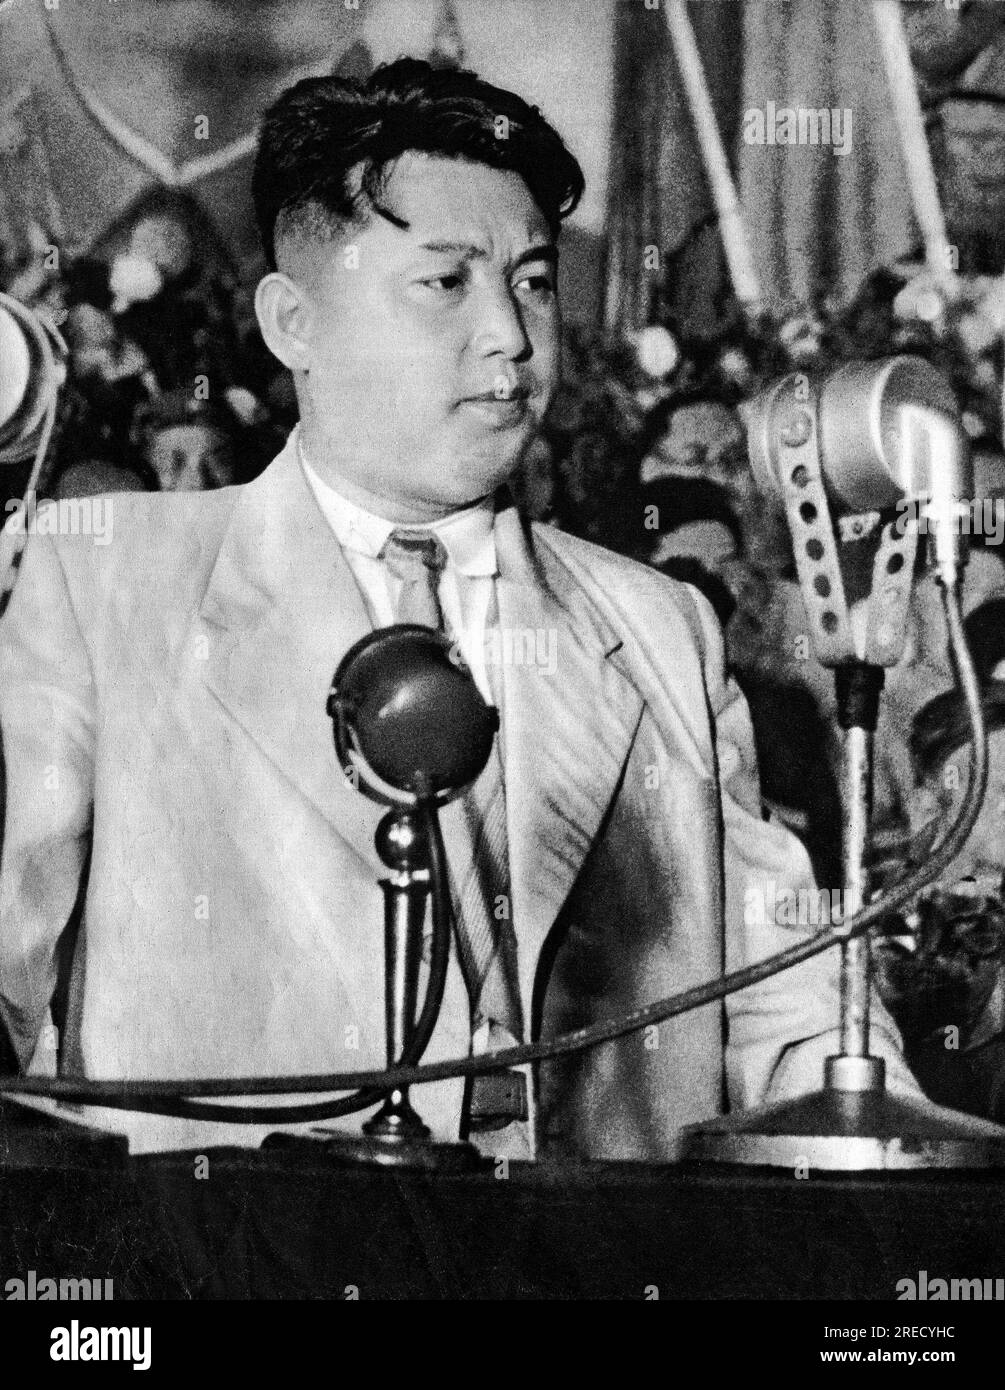 La Guerre de Coree (1950-1953), portrait de Kim Il Sung (Kim Il-sung) (1912-1994), homme d'etat et marechal nord coreen, en 1950, In 'La Guerre de Coree', Chine, 1959, coll. Selva (Portrait of Kim Il Sung, president of the Democratic People's Republic of Korea (North Korea), in 1950, from 'Korean War', China 1959) Stock Photo